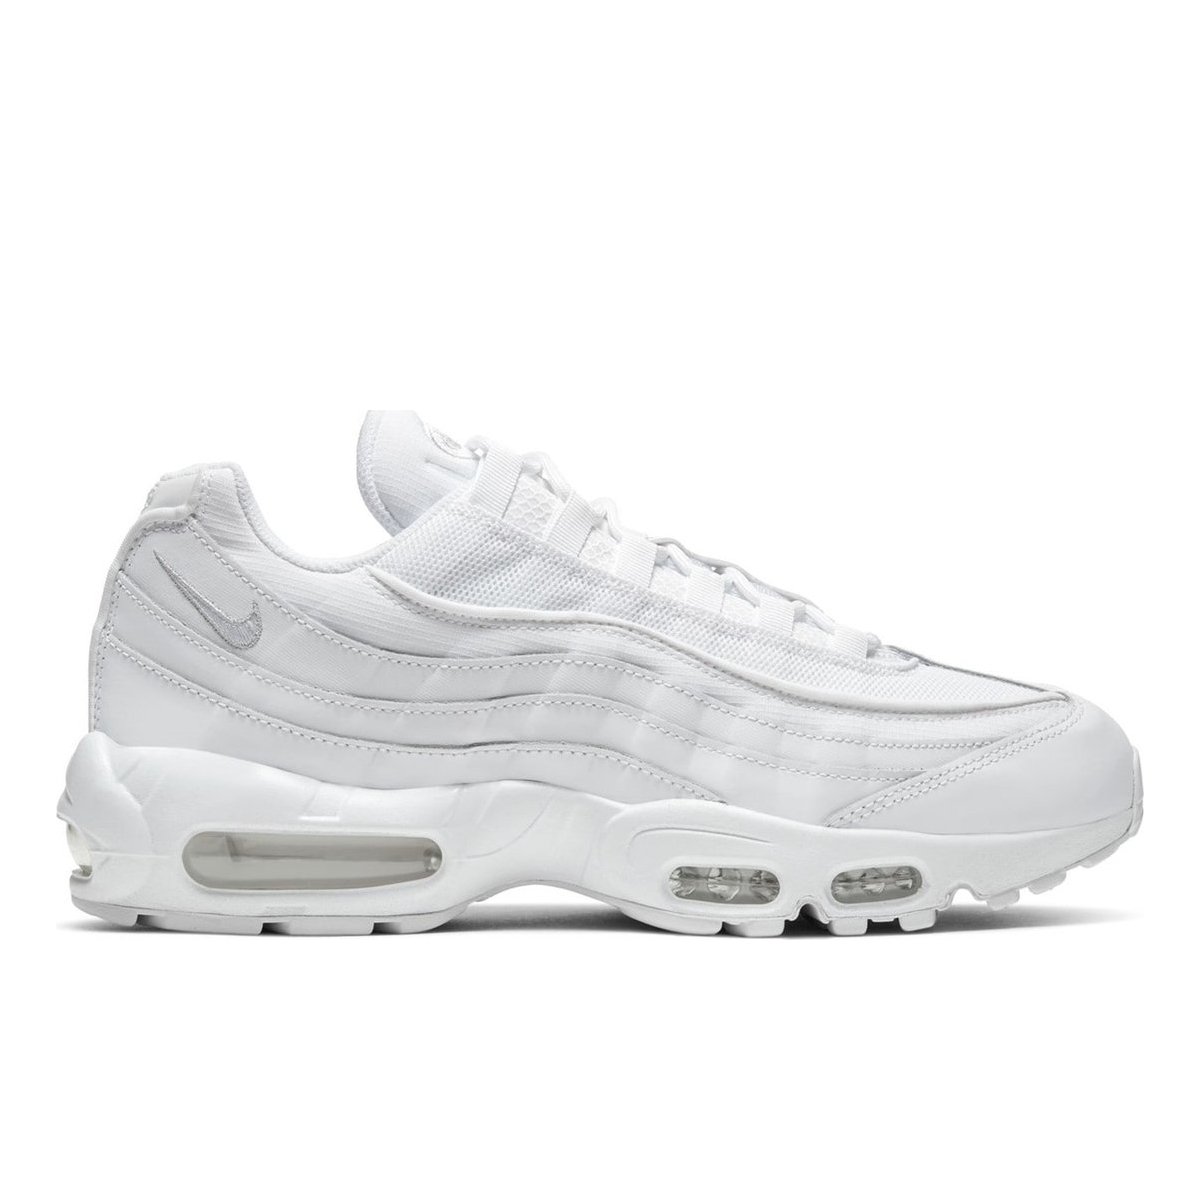 Nike Air Max 95 Essential Shoes Mens White/White, £170.00